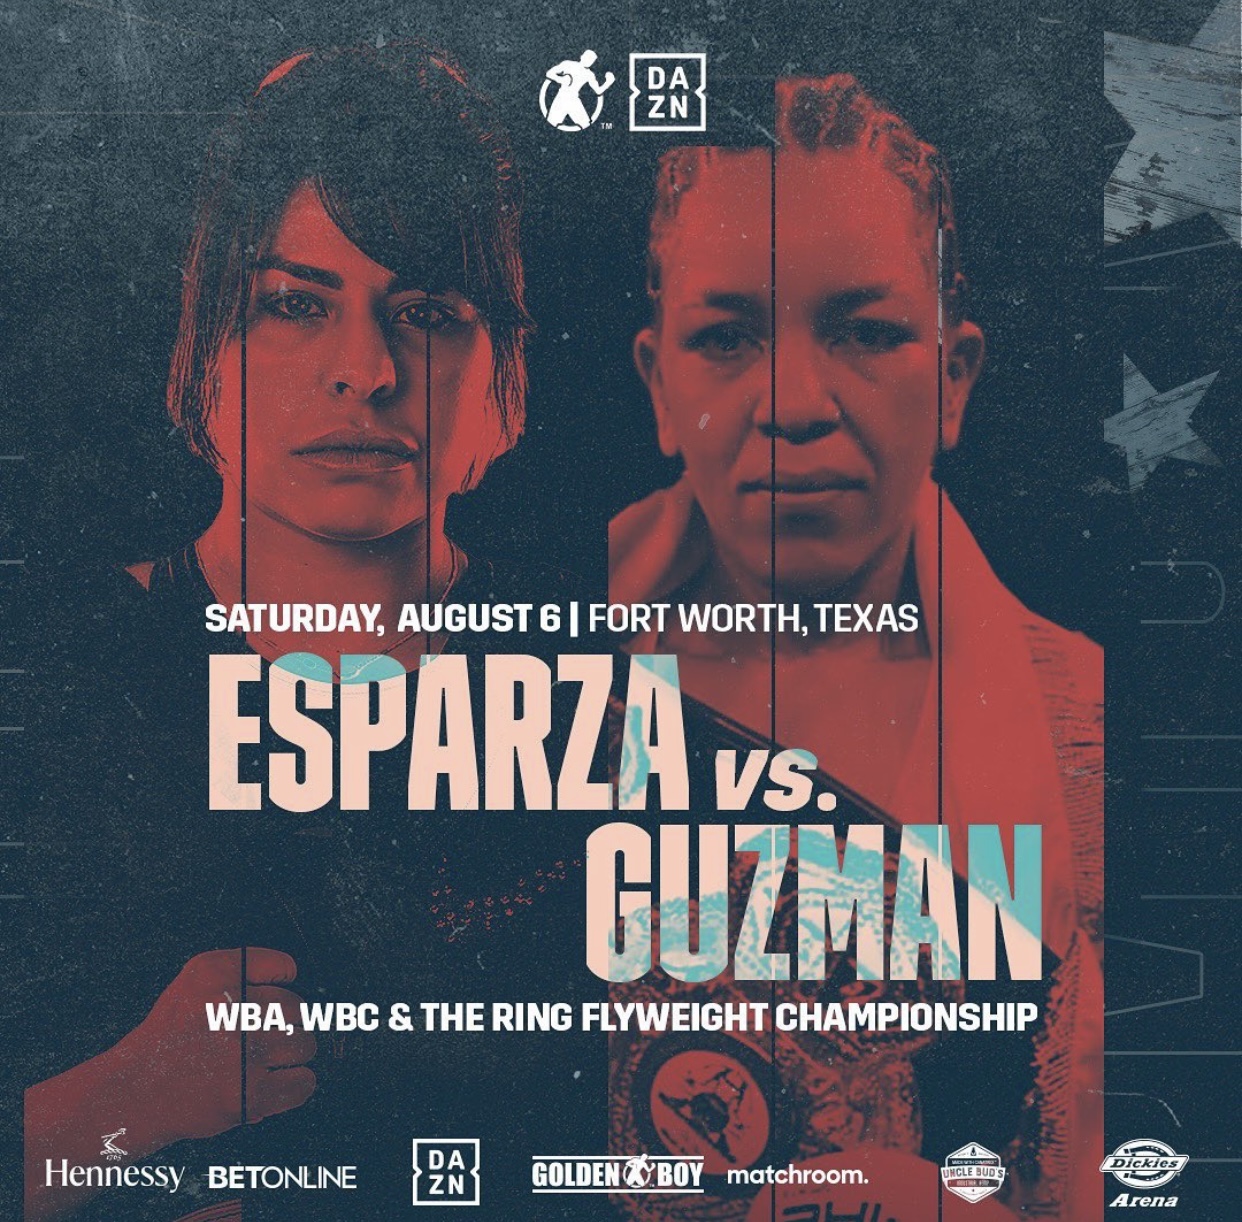 Esparza-Guzman for WBA belt on Saturday